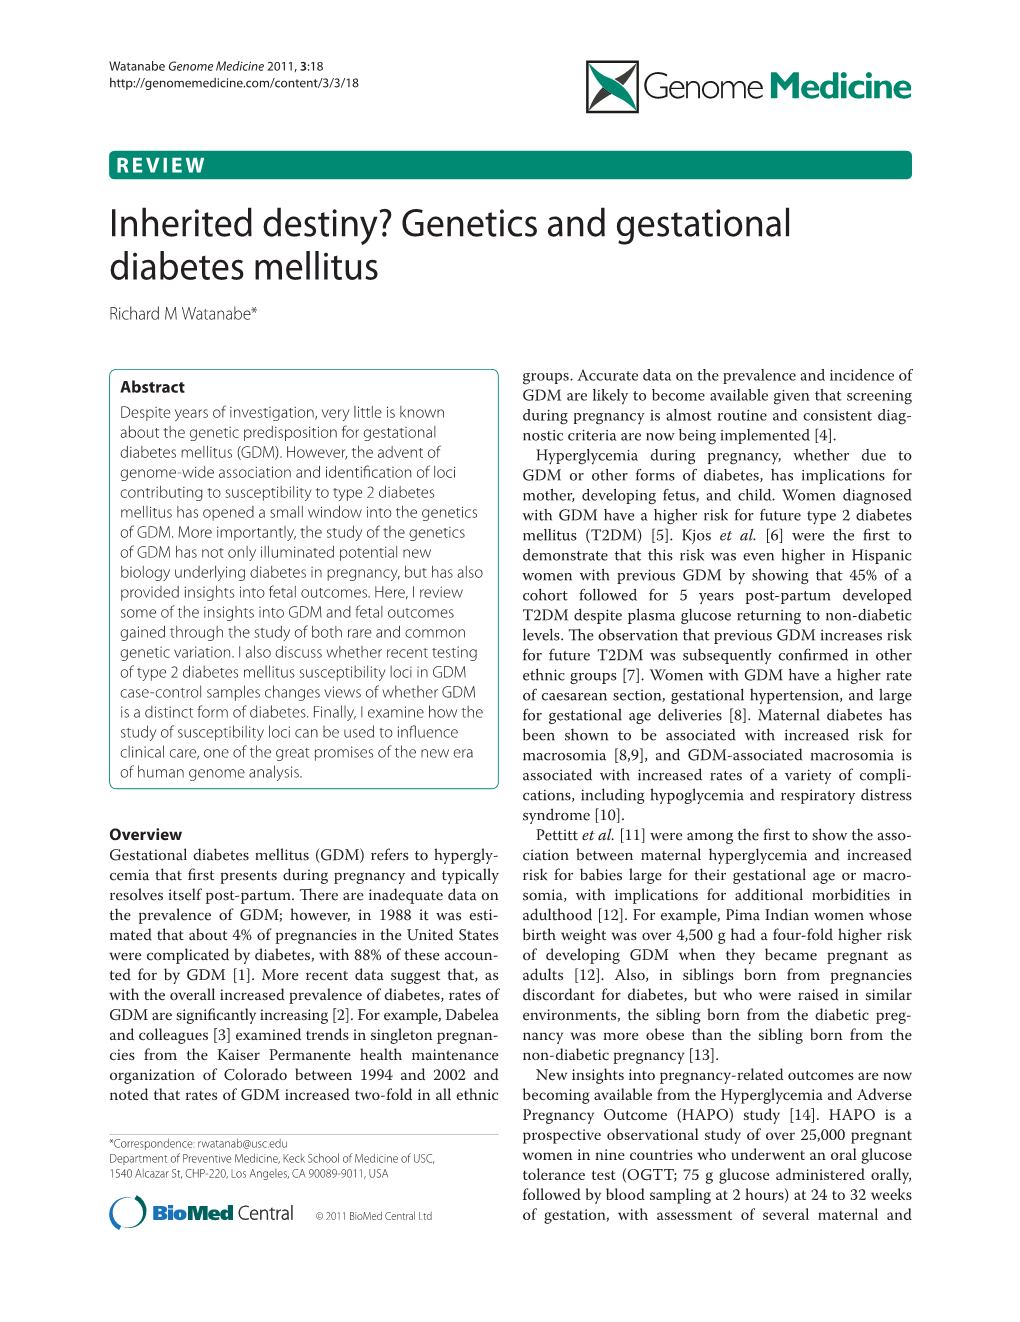 Inherited Destiny? Genetics and Gestational Diabetes Mellitus Richard M Watanabe*